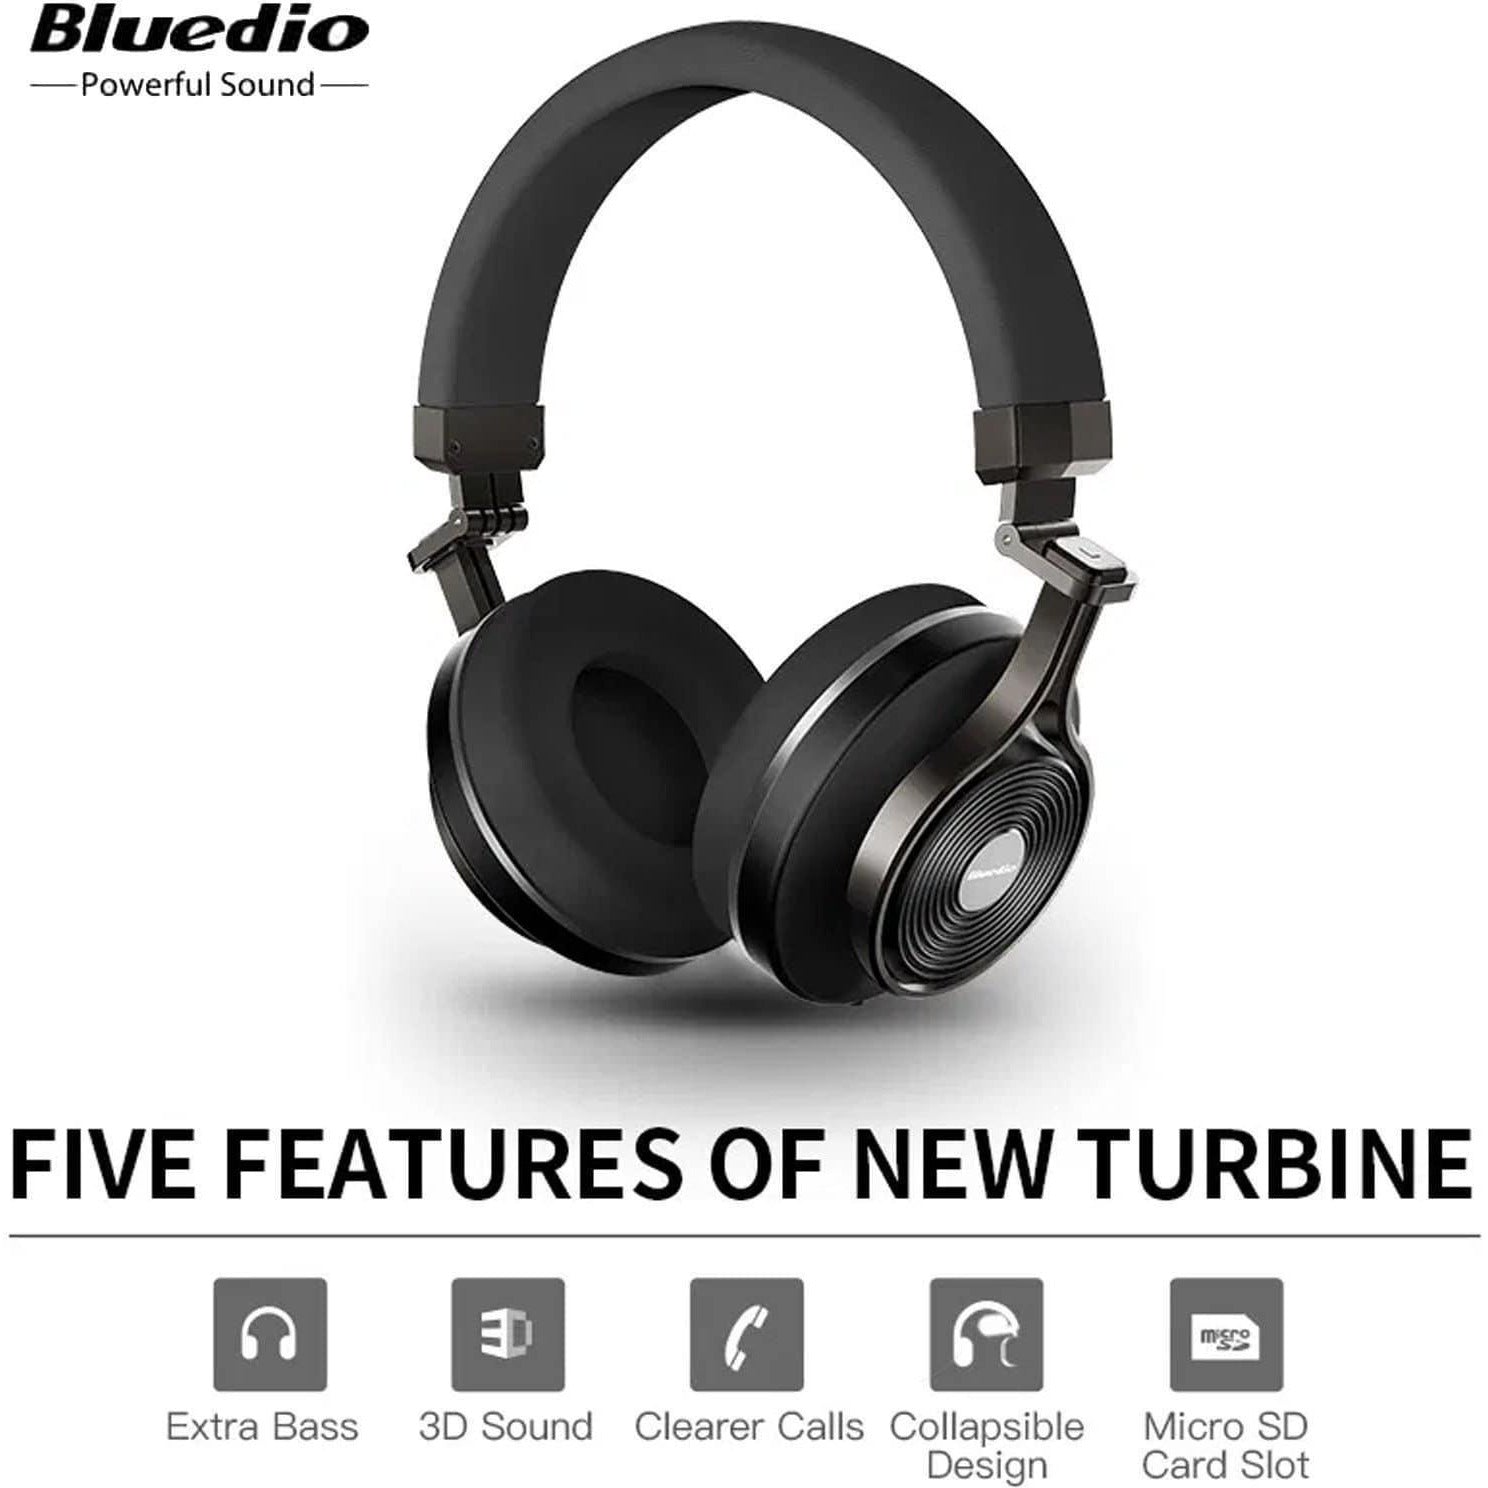 Bluedio T3 Plus Bluetooth | Shopna Online Store .